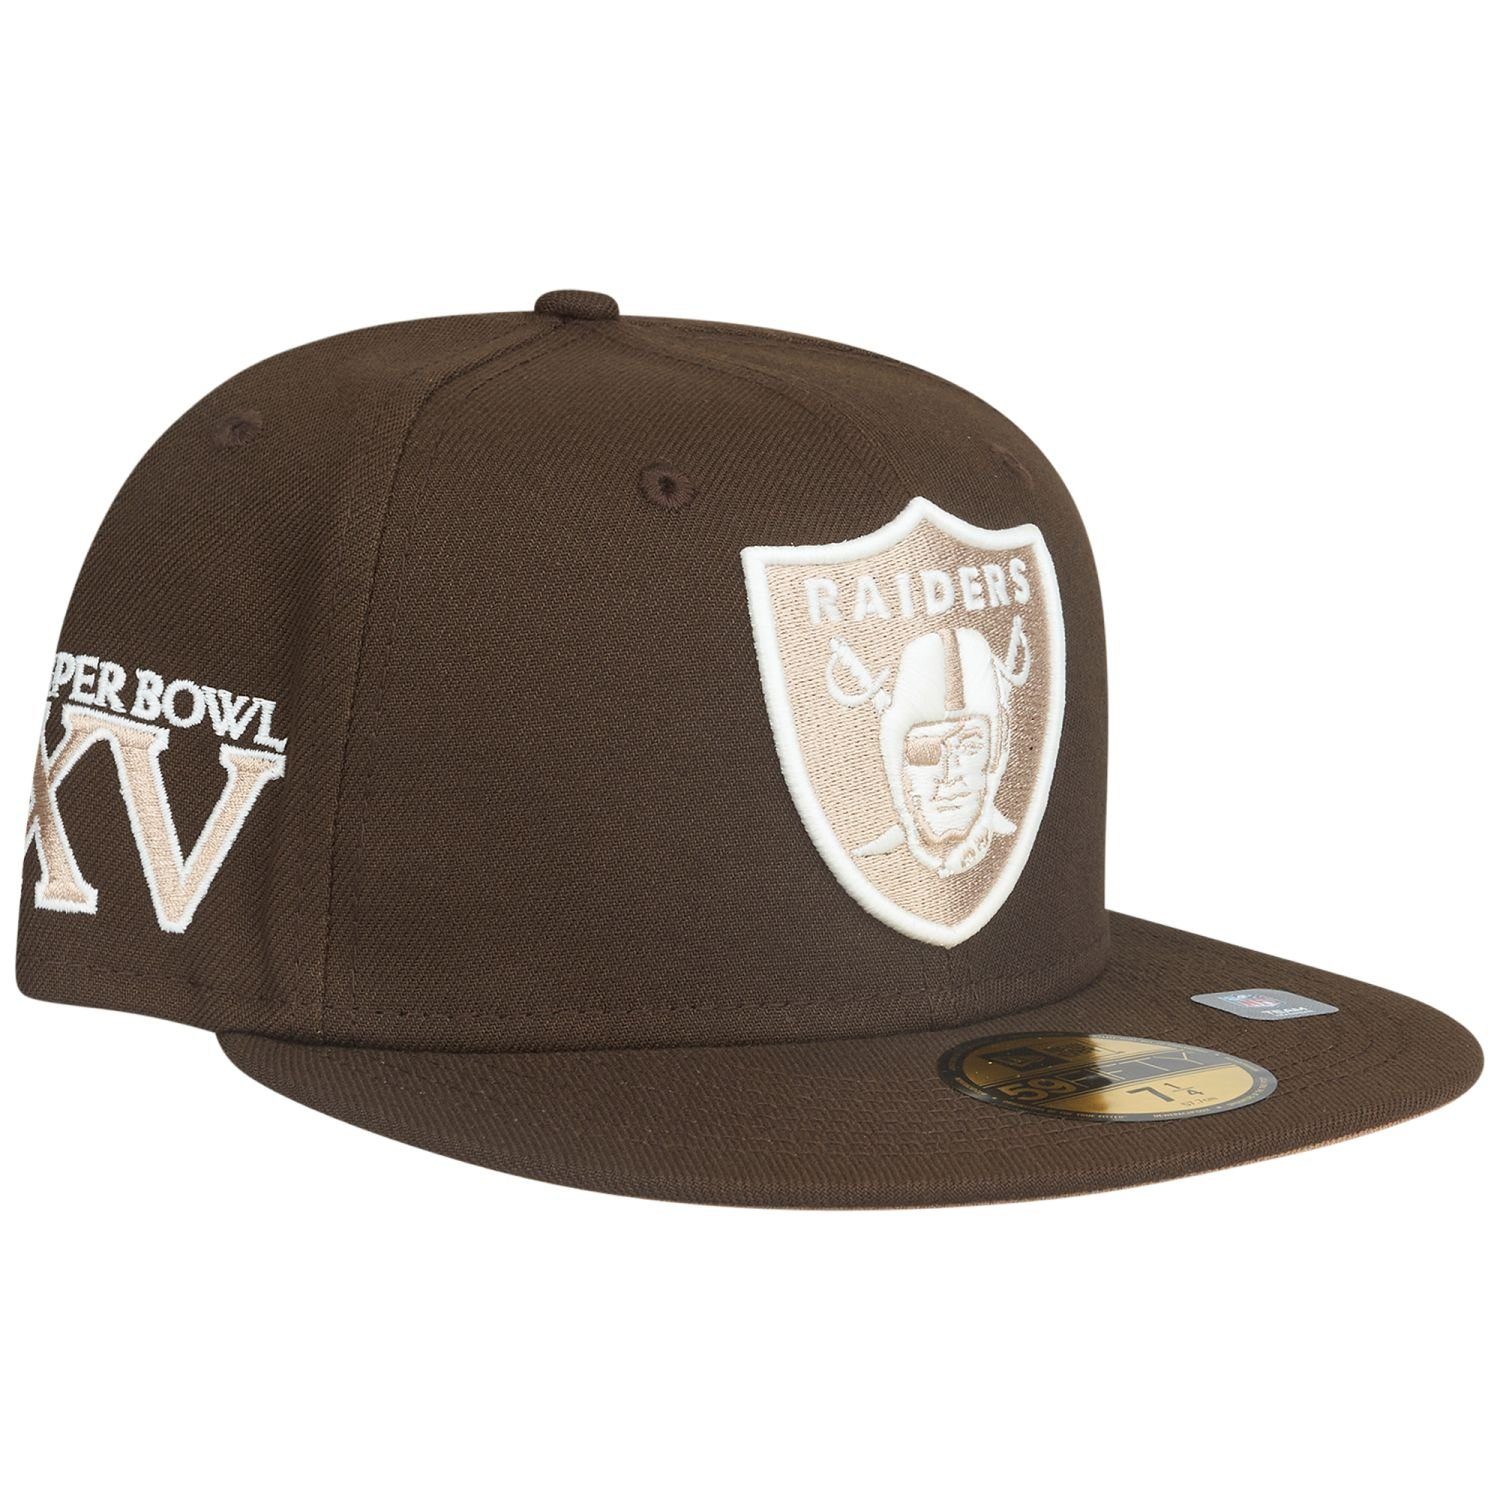 New Era Fitted Cap 59Fifty Las Vegas Raiders walnut